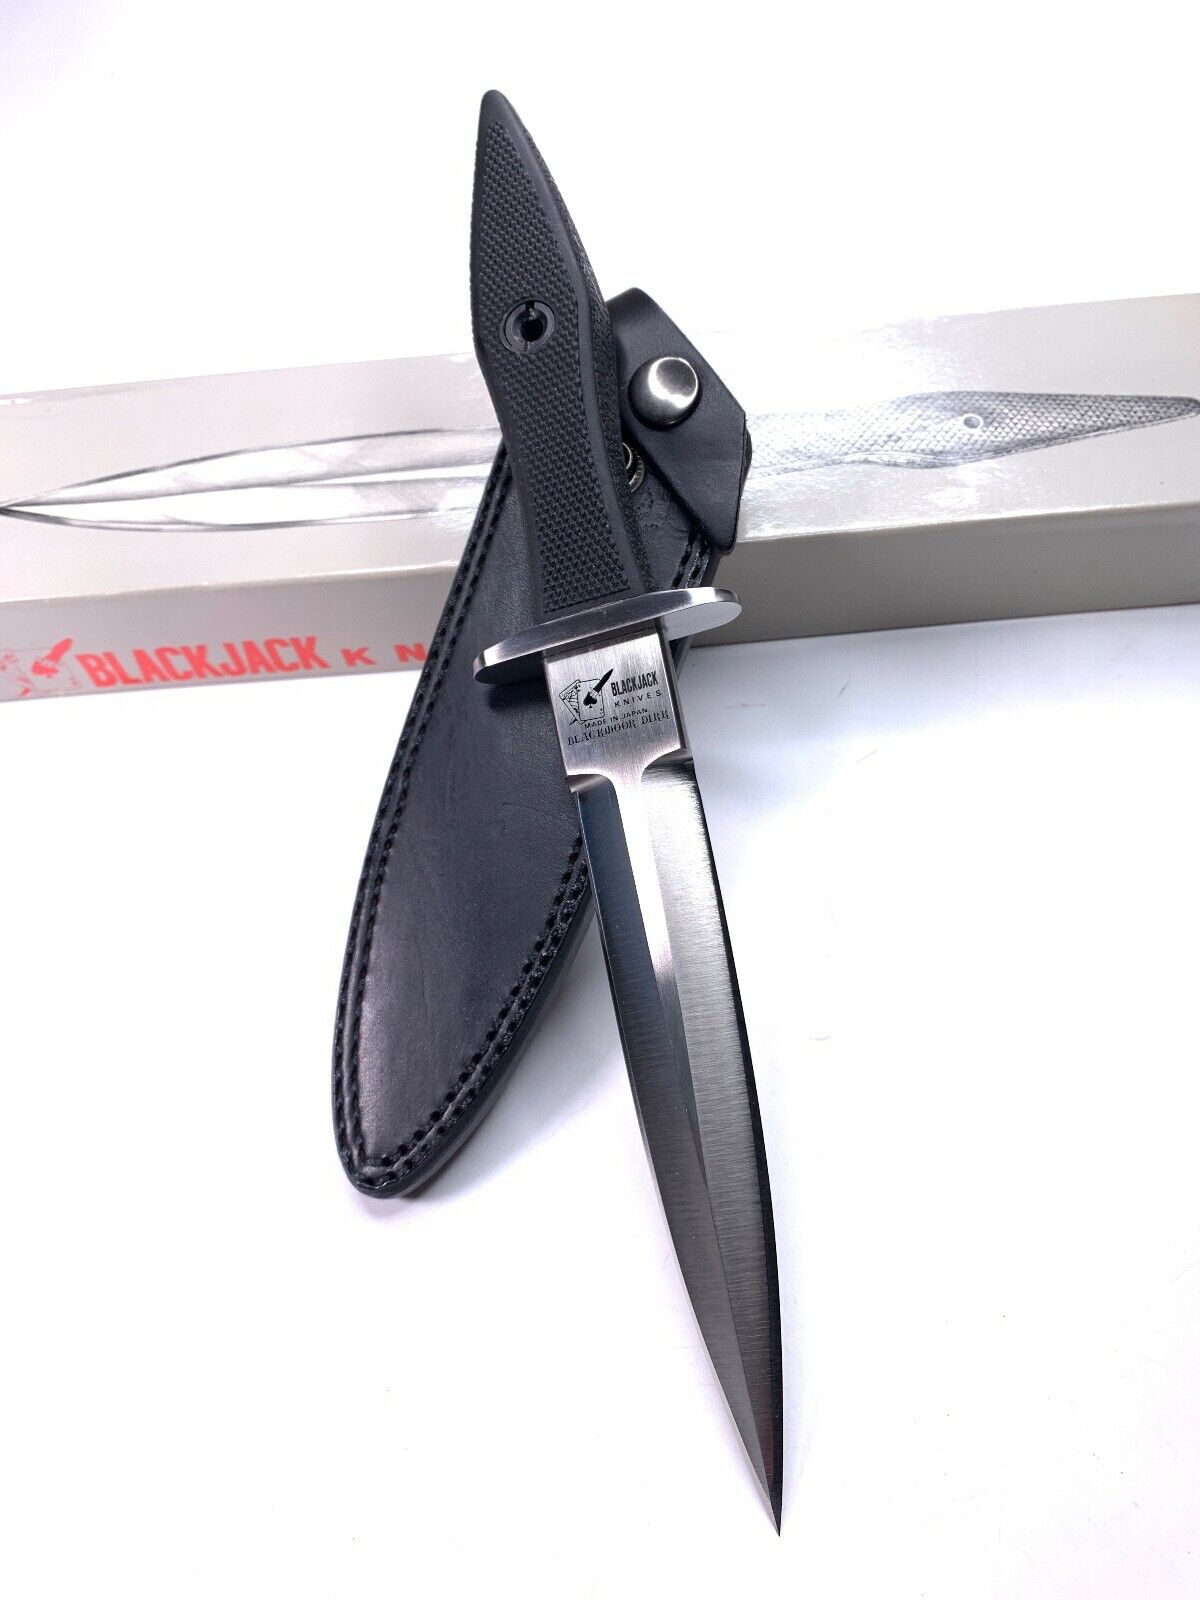 Vintage Blackjack Blackmoor Dirk Knife Dagger Made in Japan w/ Box